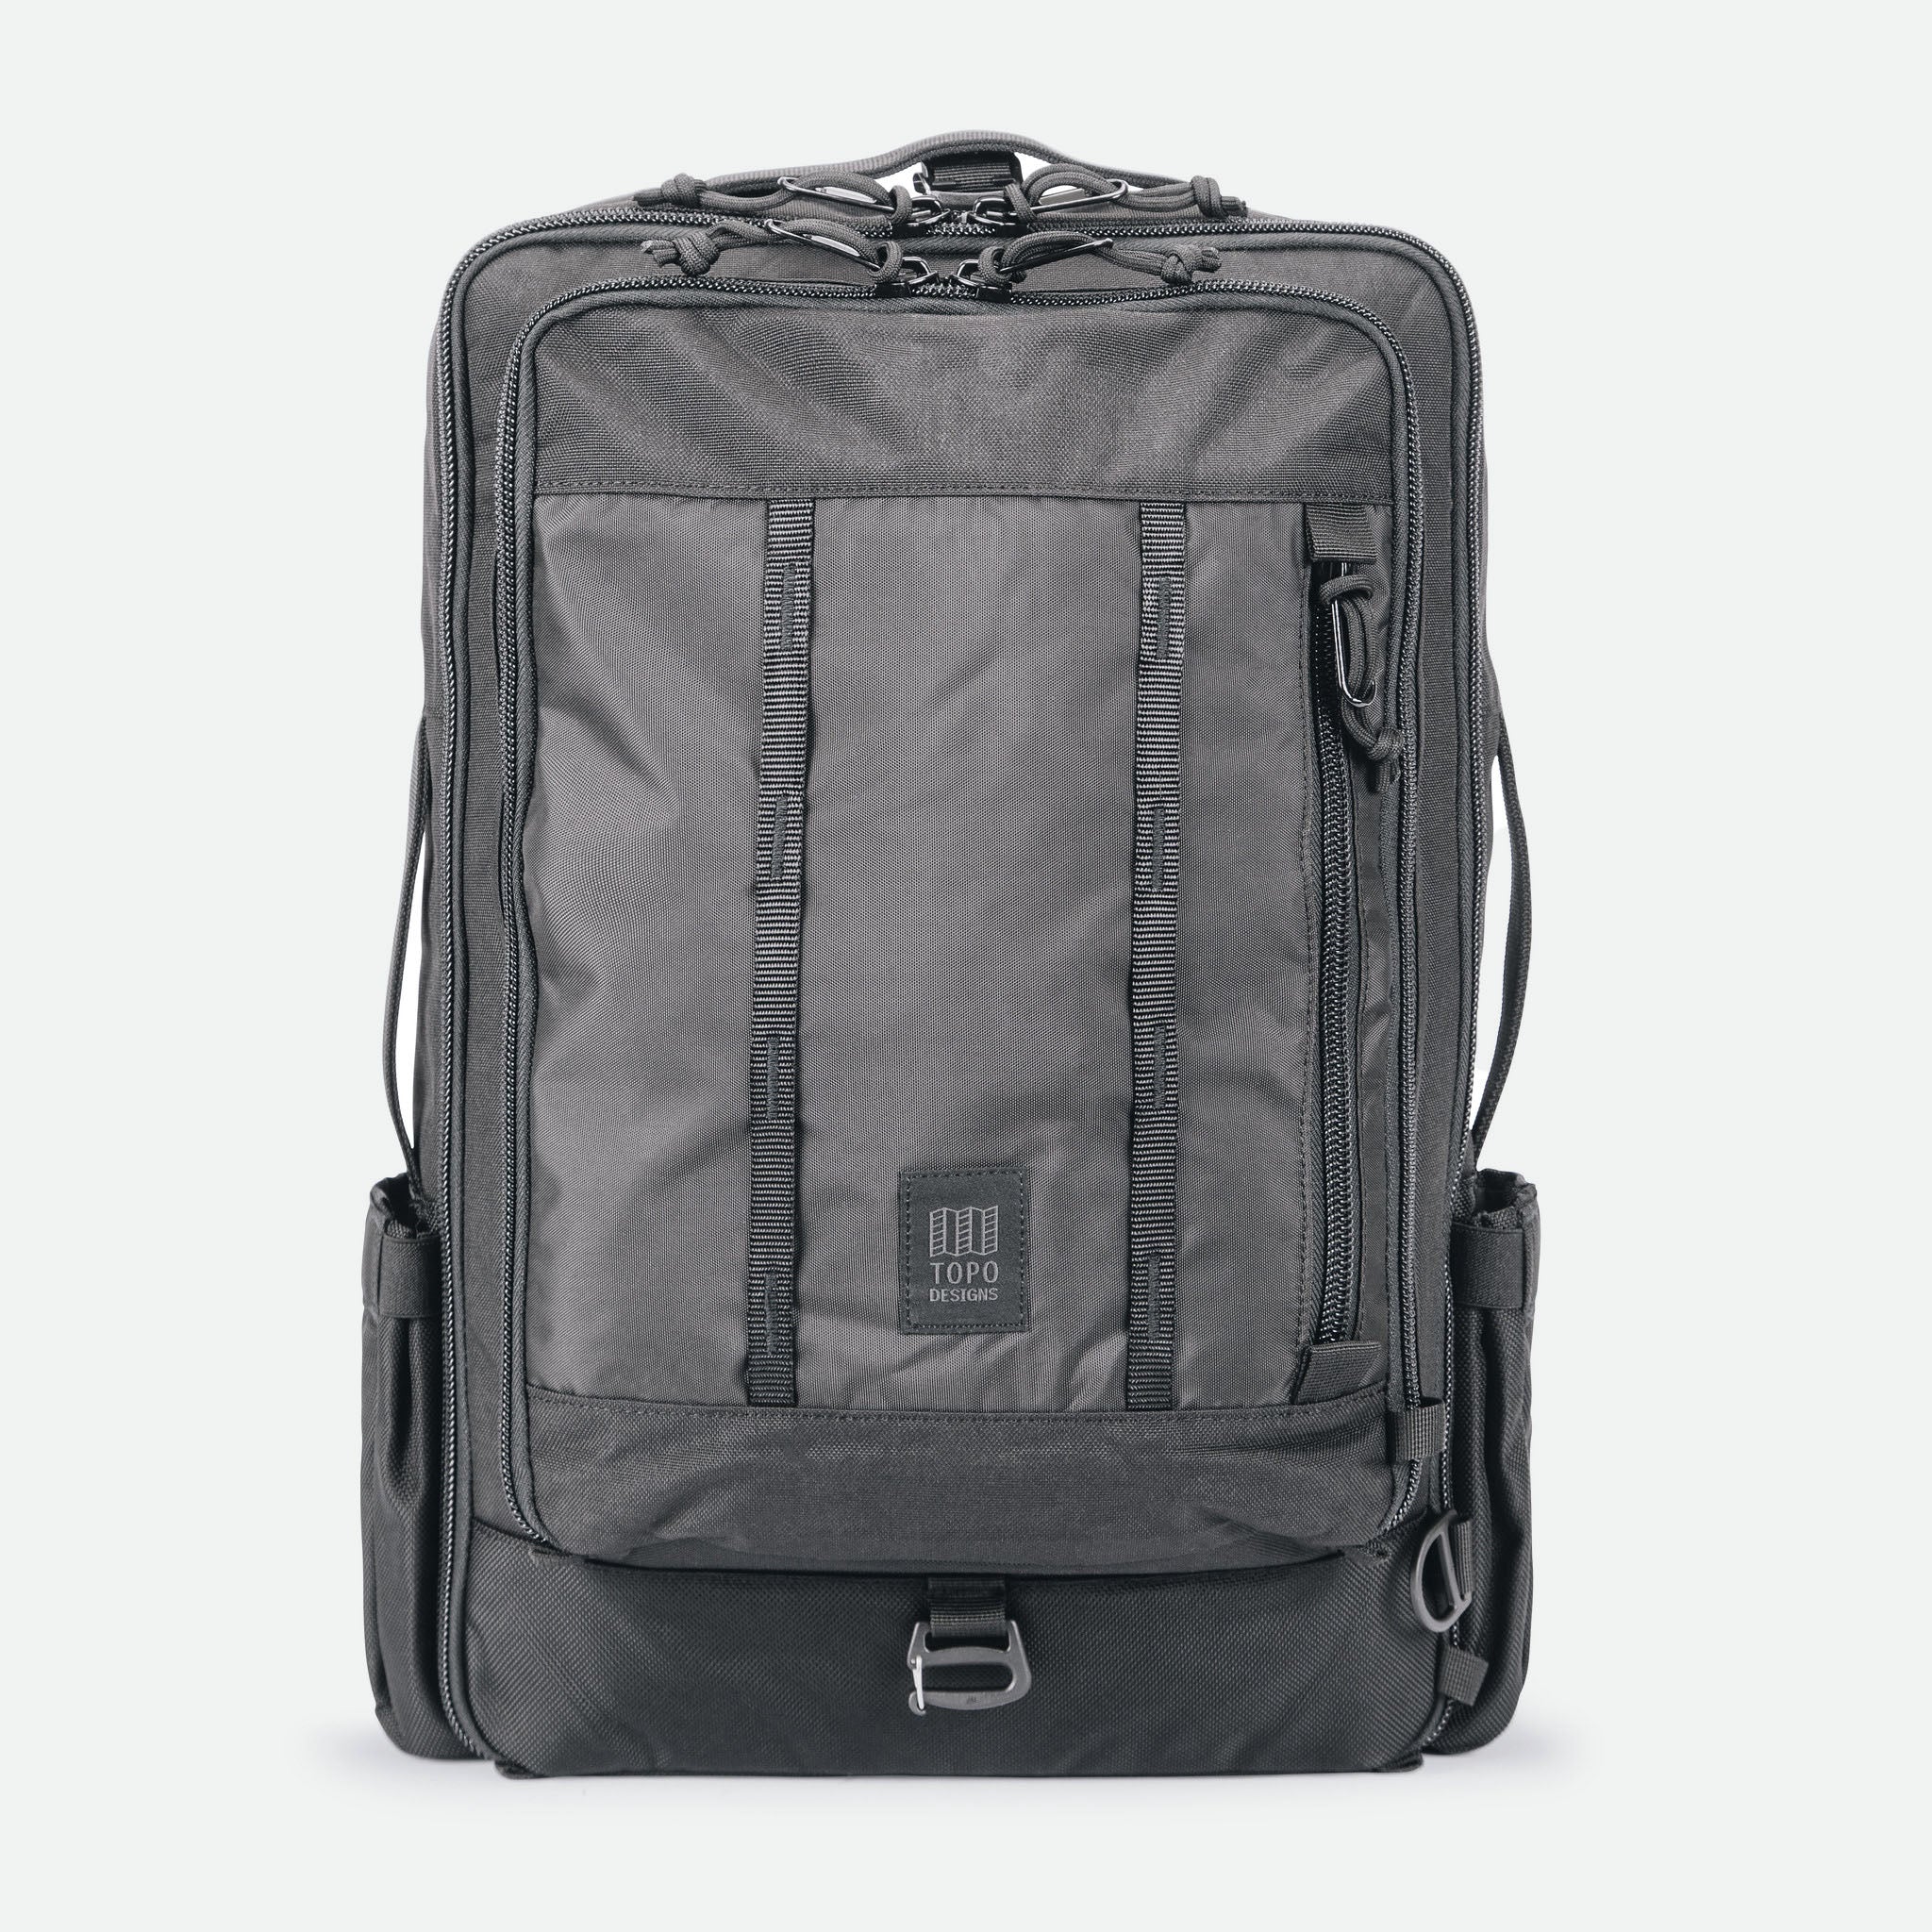 Global Travel Bag 30L Black